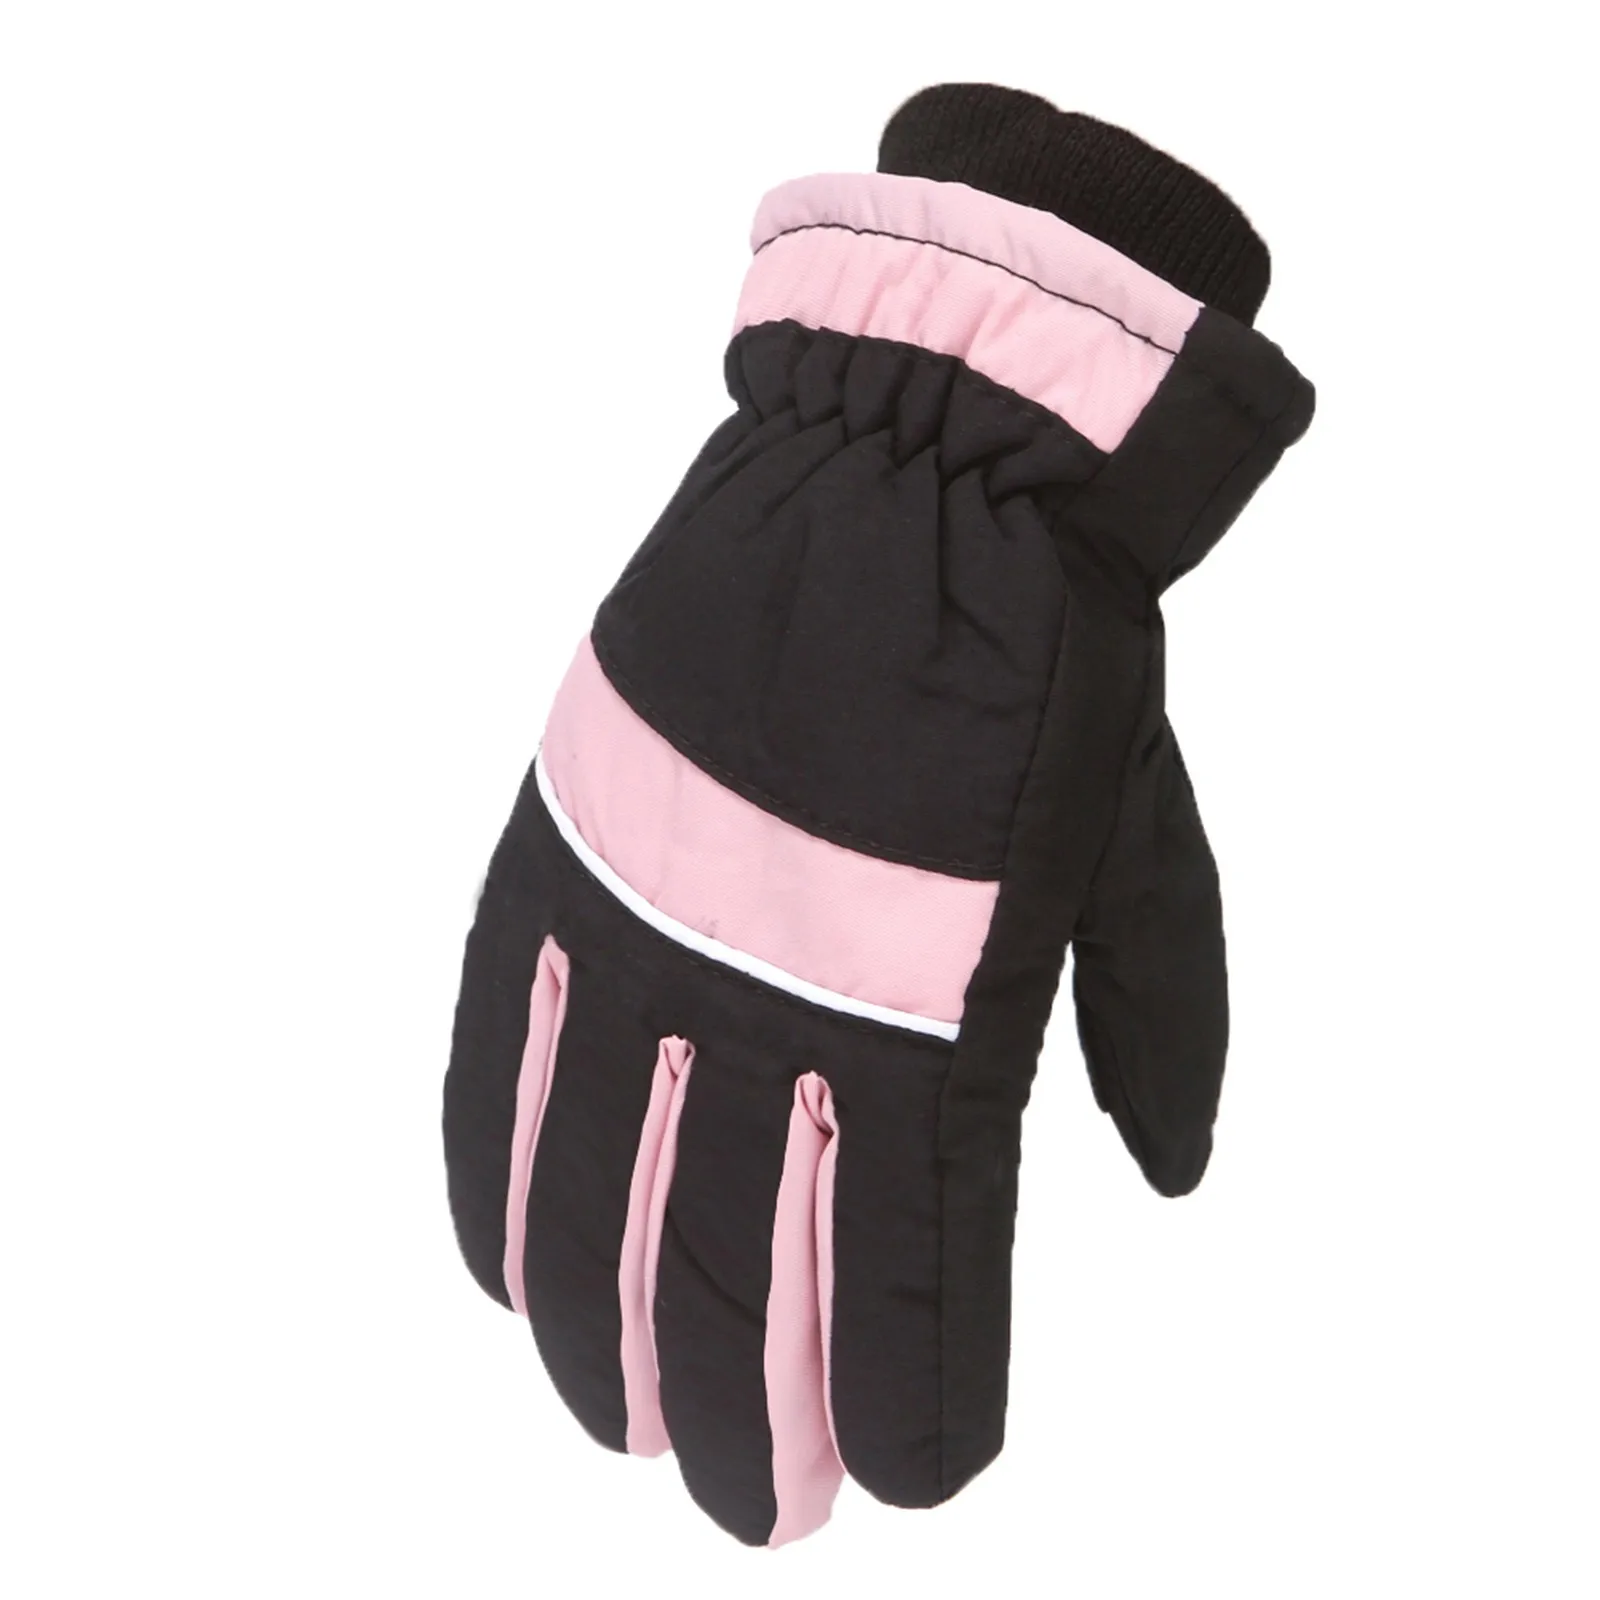 Toppers Kids Boys Girls Winter Ski Gloves Waterproof Ski Mittens XS 